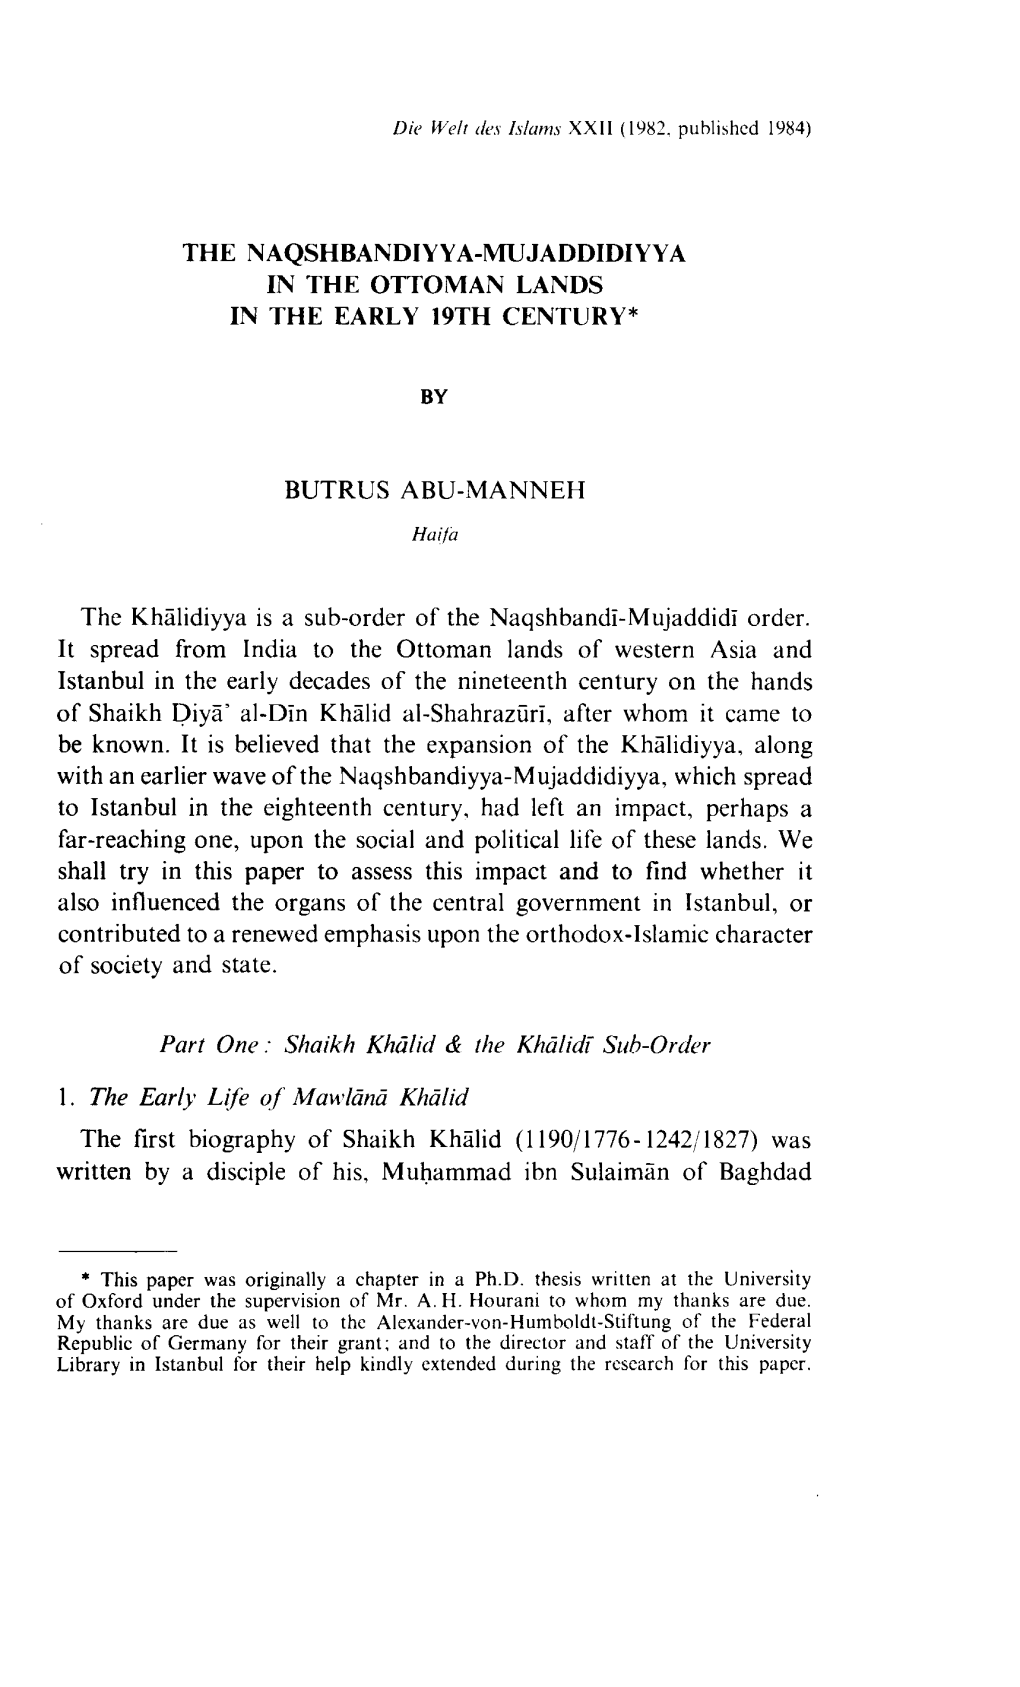 The Naqshbandiyya-Mujaddidiyya in the Ottoman Lands in the Early 19Th Century*